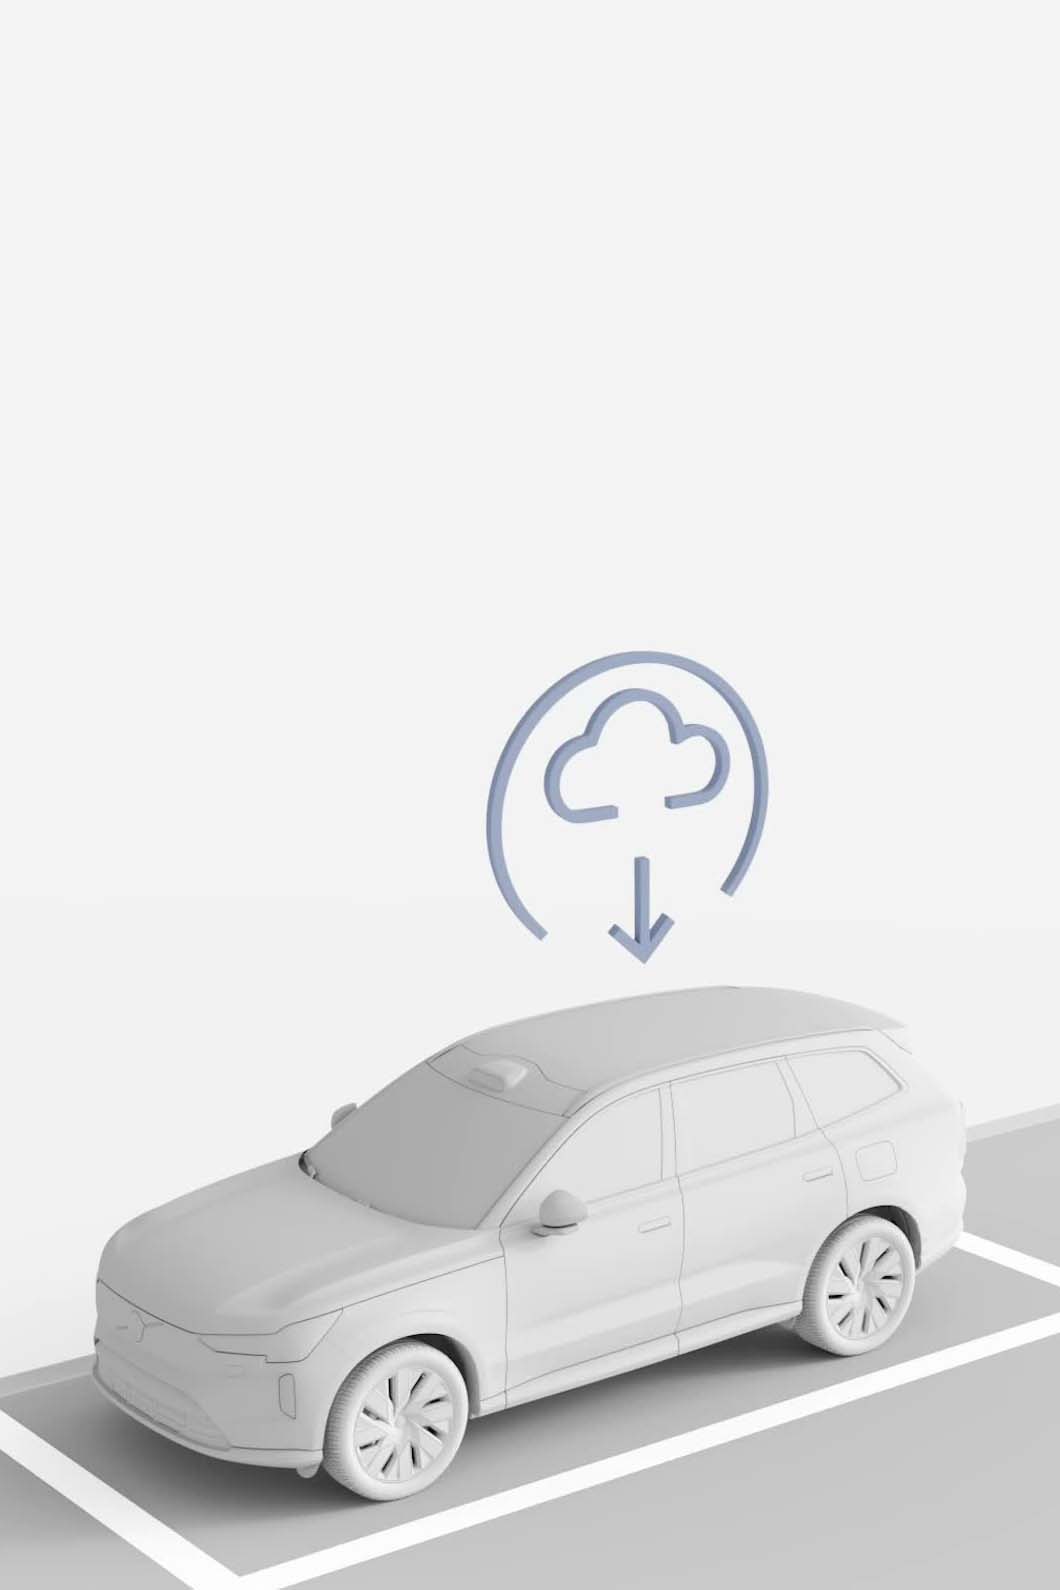 Illustration av en Volvobil som får en programvaruuppdatering.